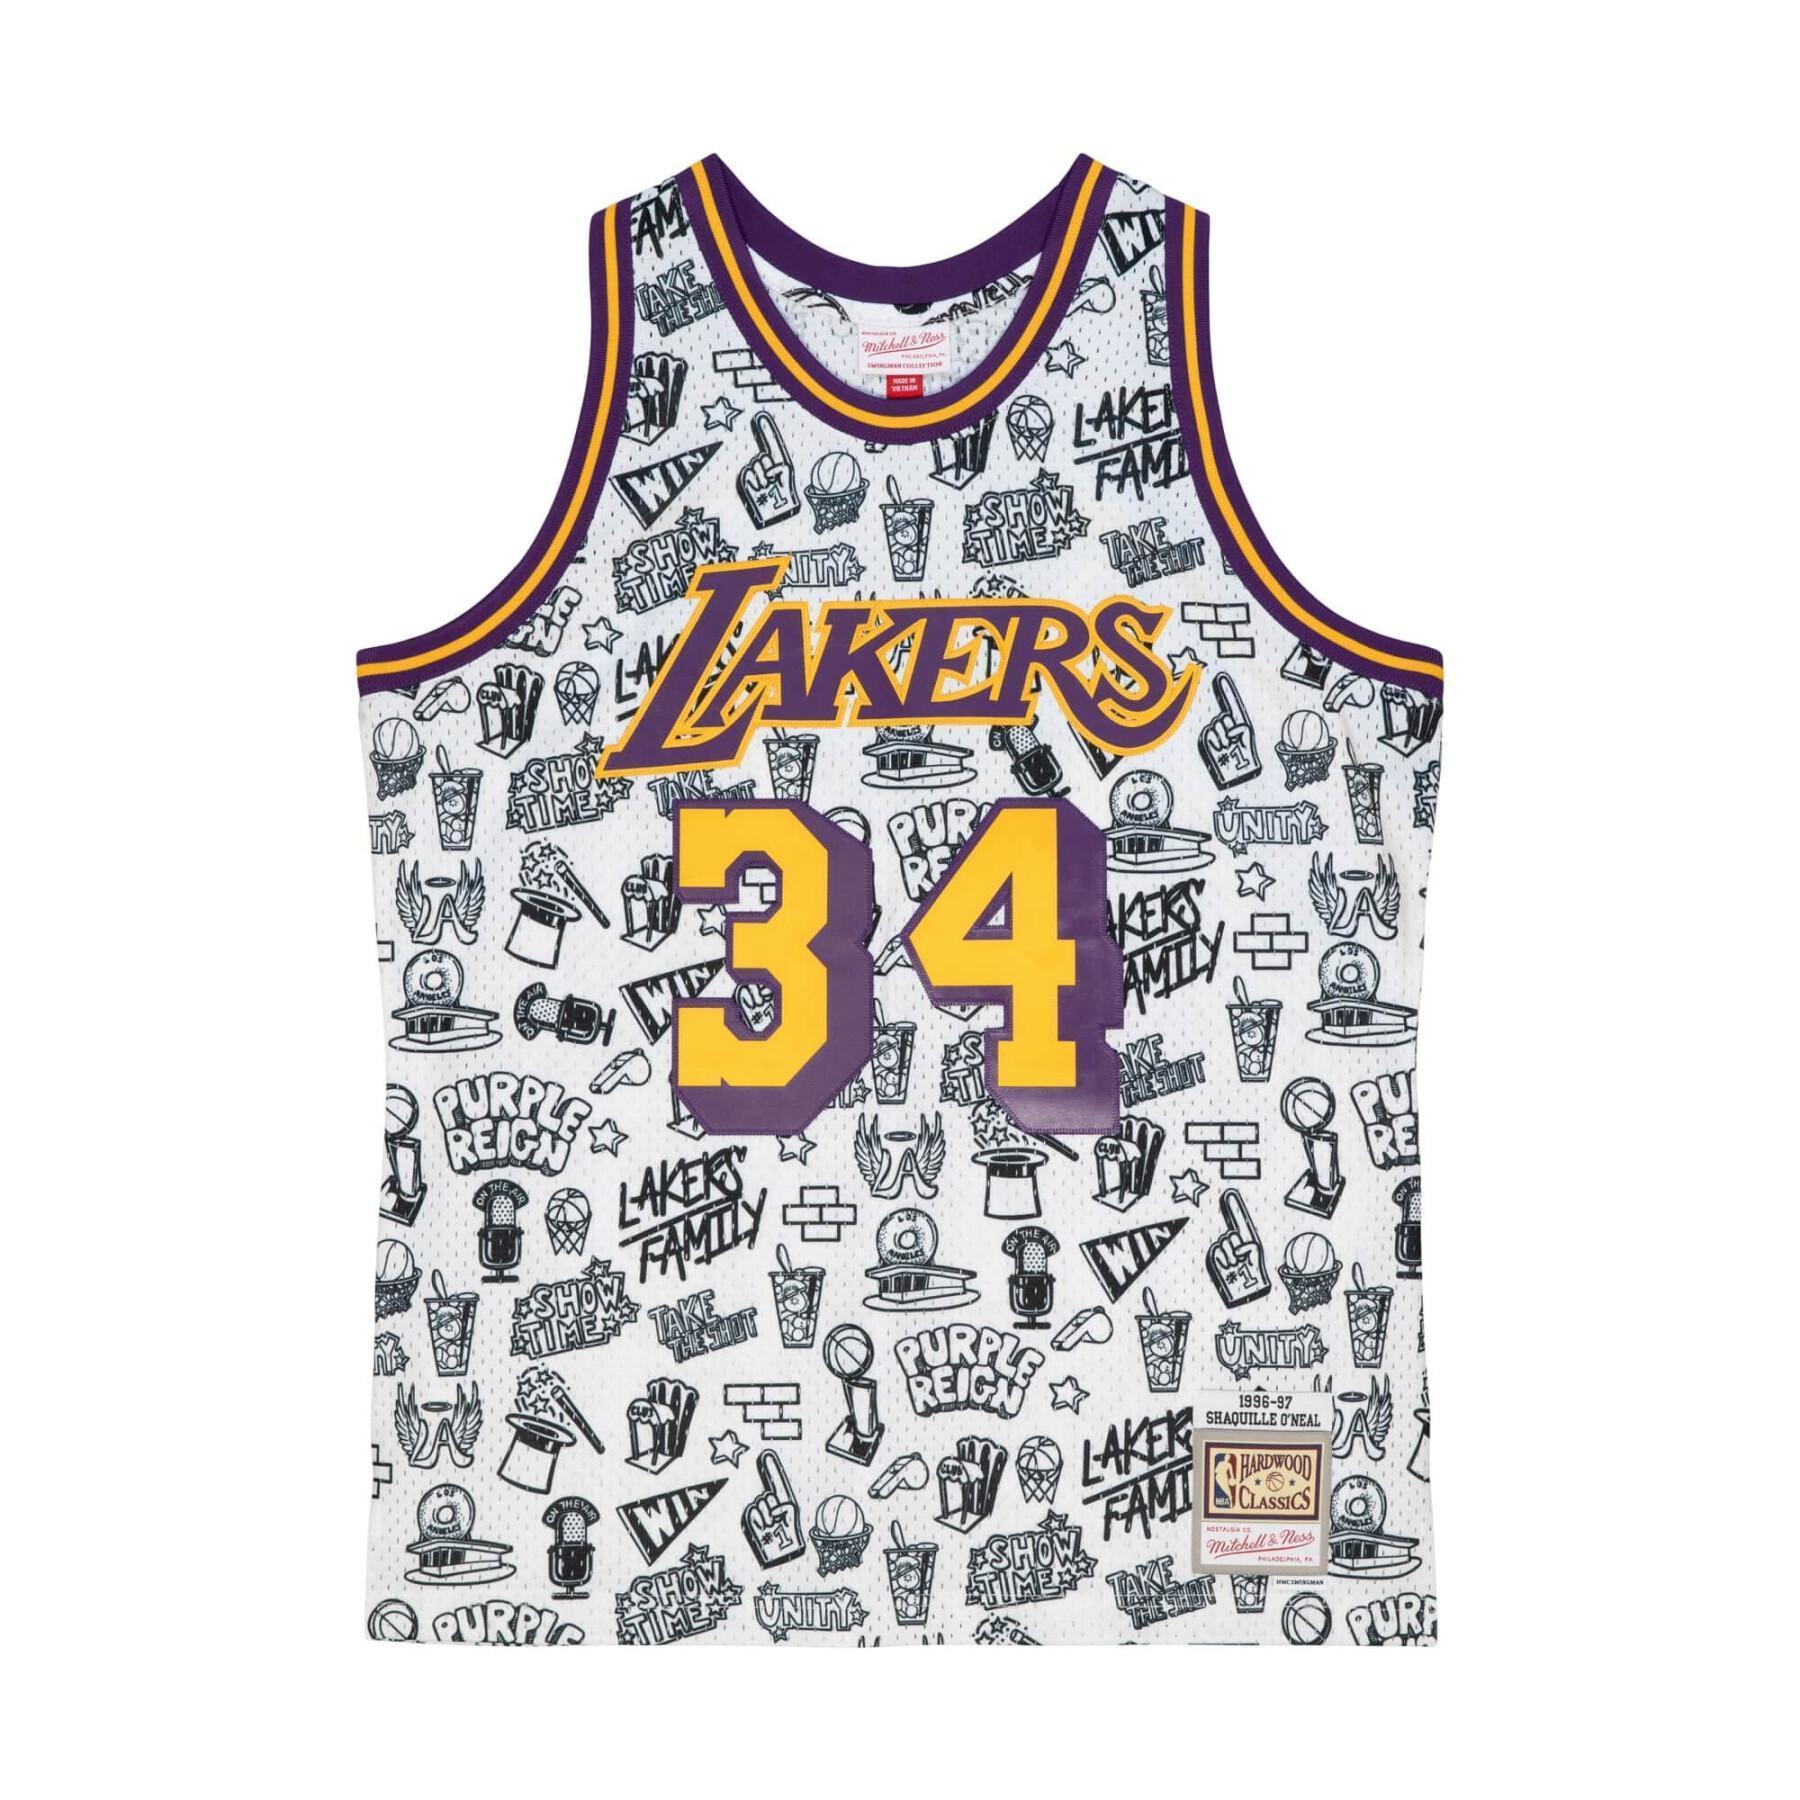 Mitchell & Ness x NBA Los Angeles Lakers Energy Purple Basketball Jersey